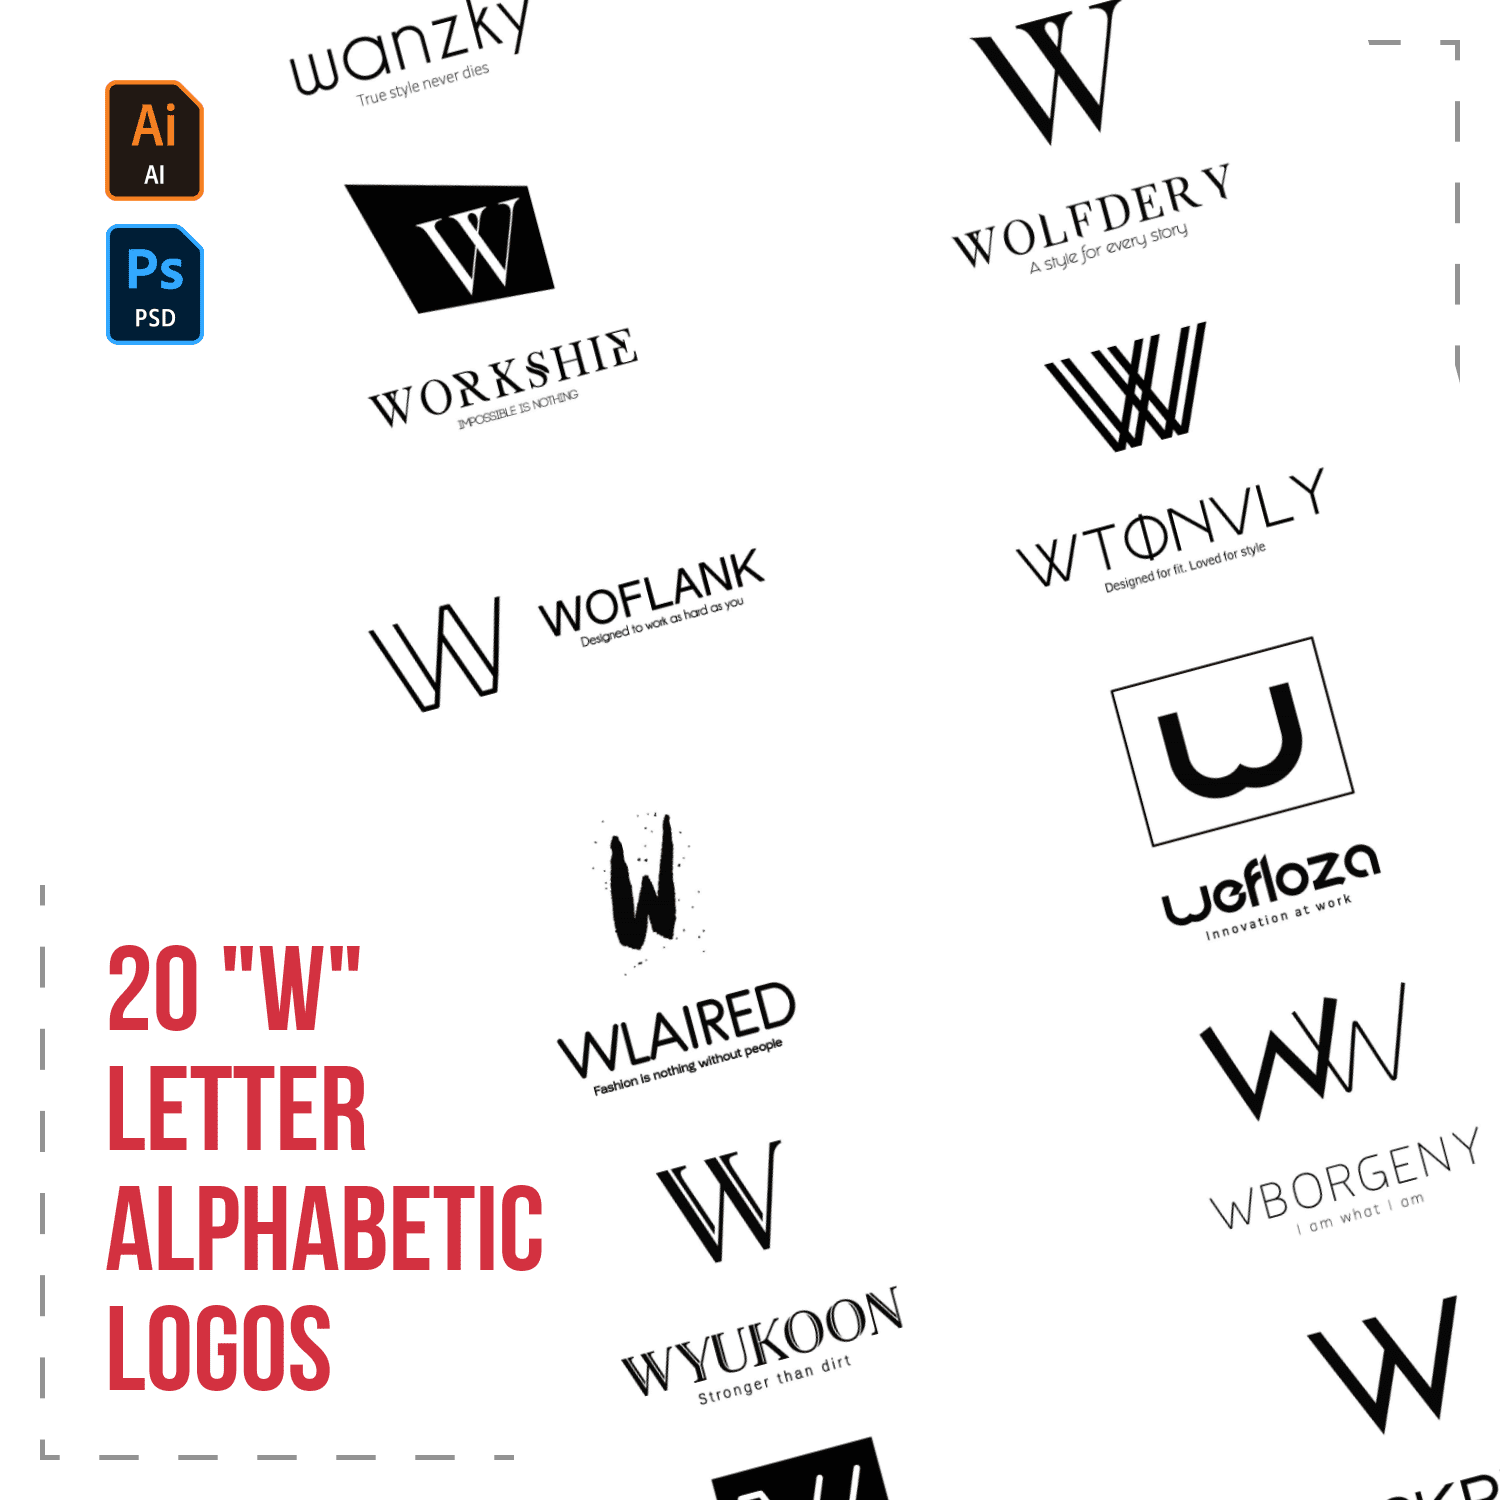 20 "W" Letter Alphabetic Logos cover.